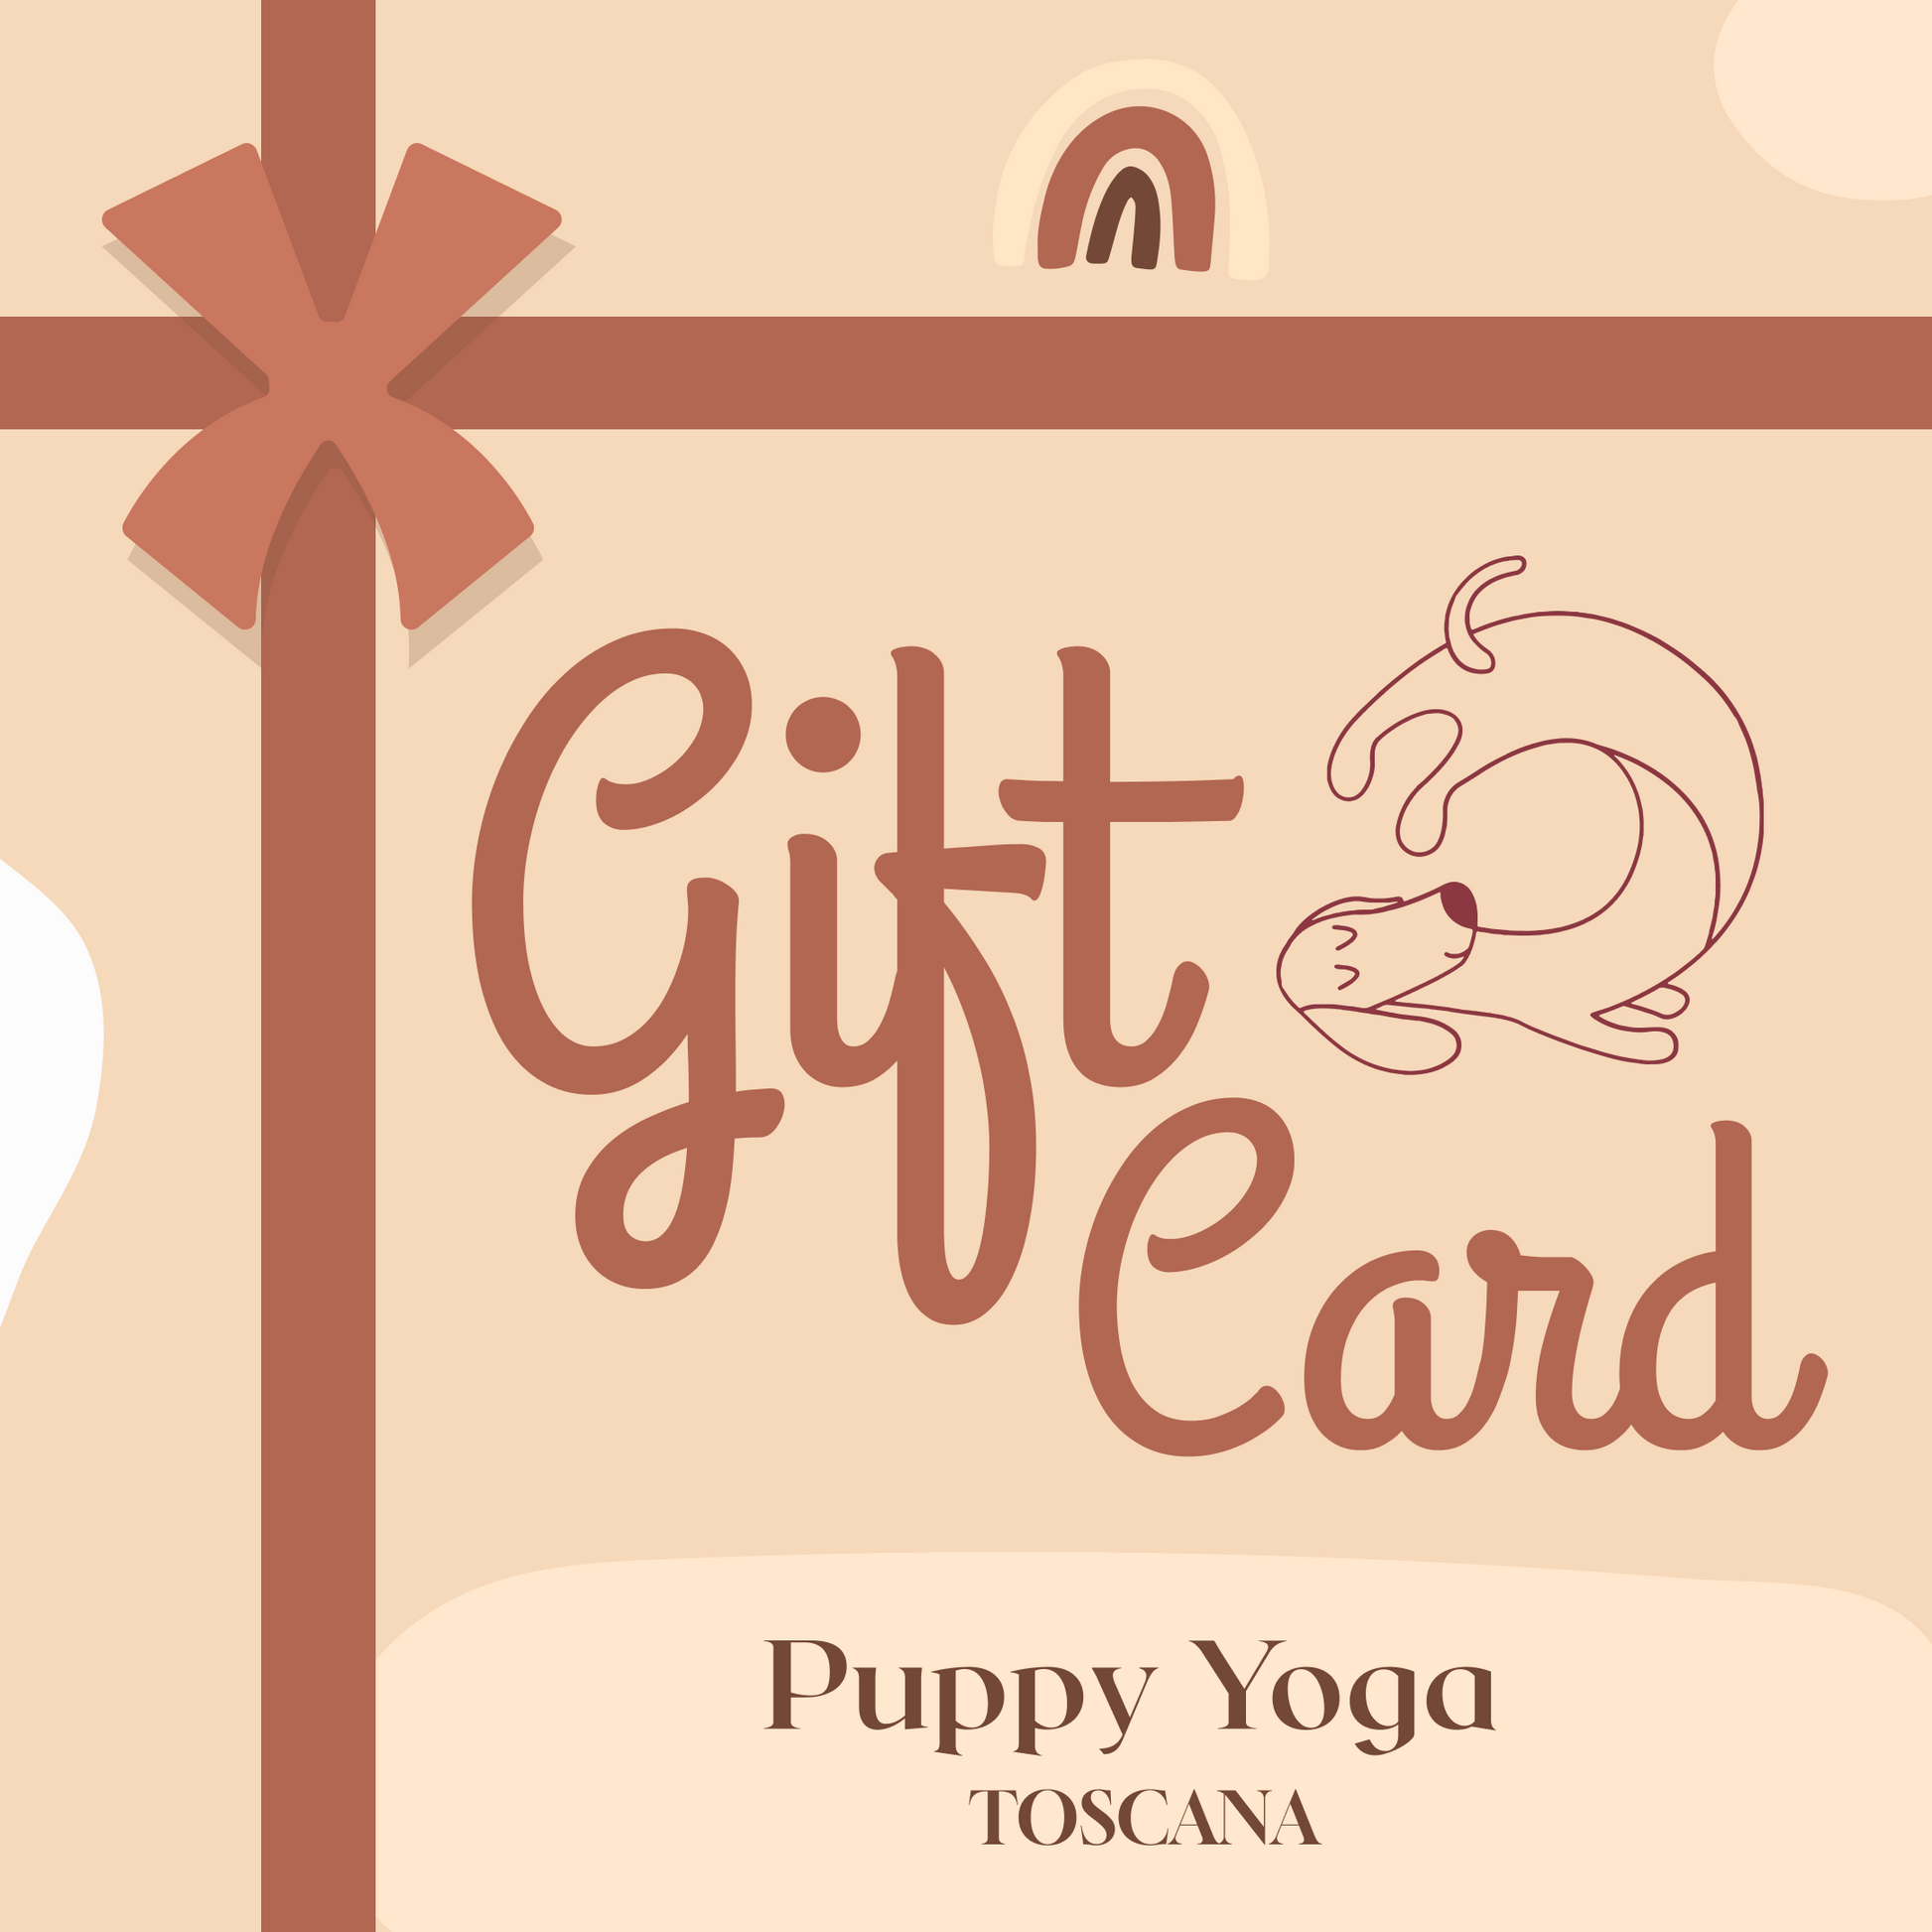 Puppy Yoga Gift Card